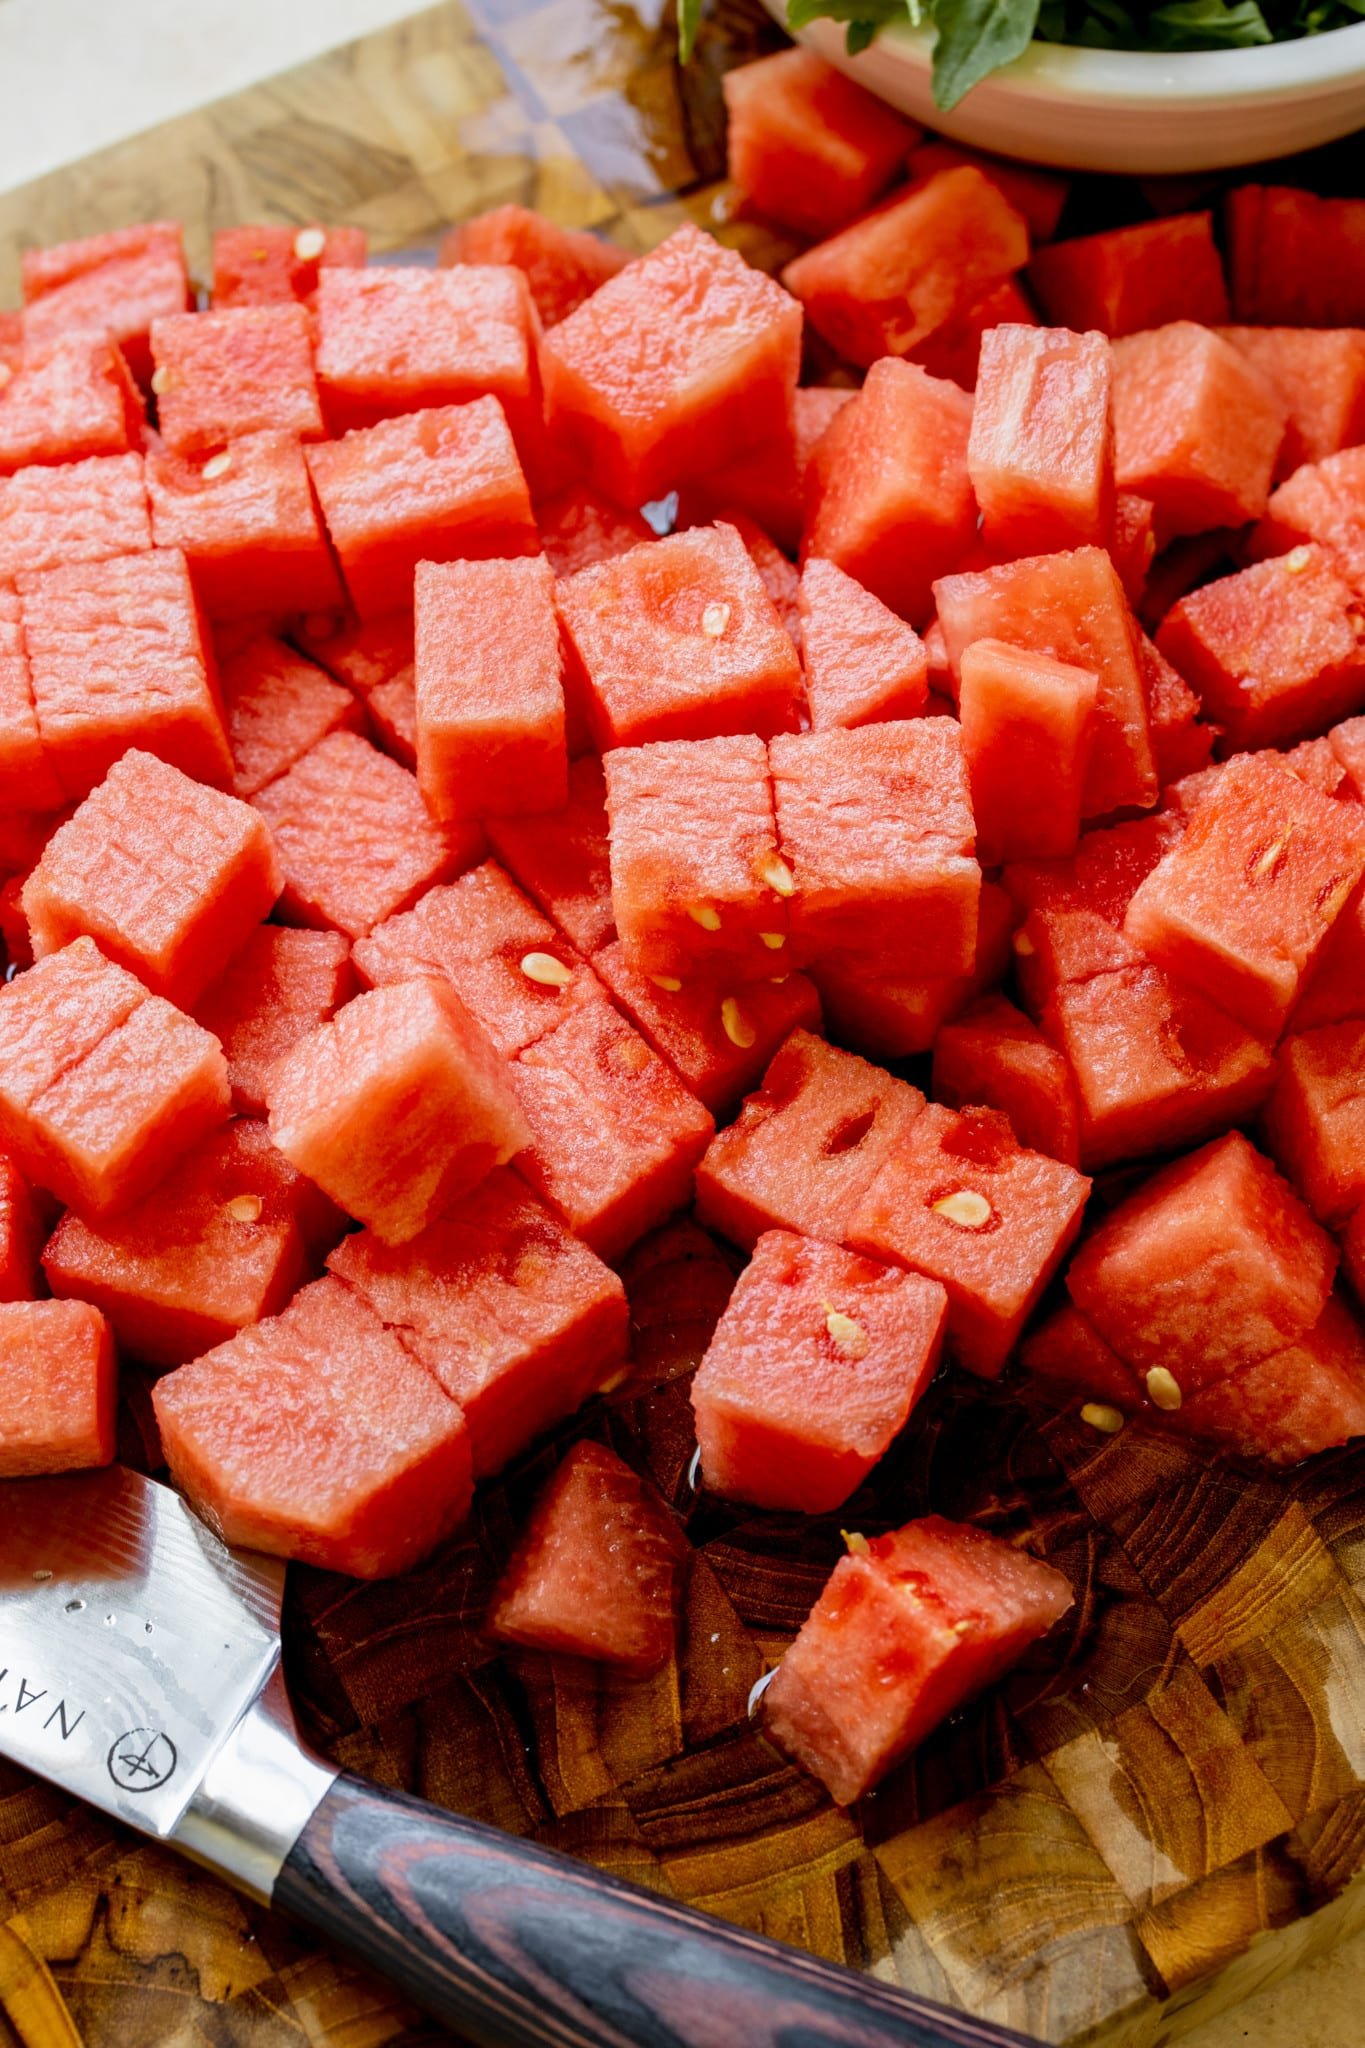 cubed watermelon on a cutting board.